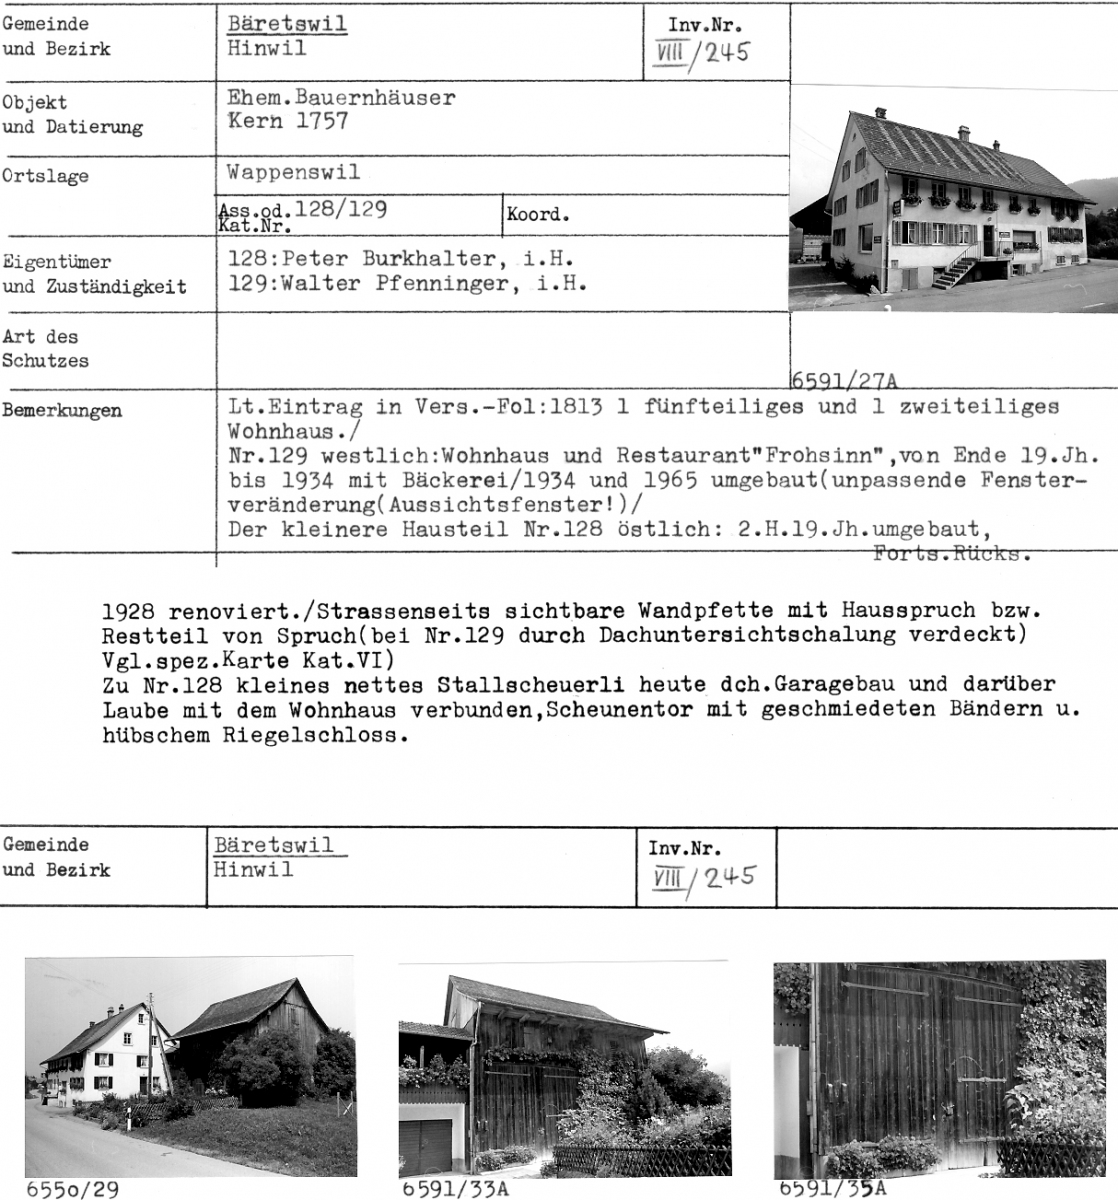 ehem. Bauernhäuser, Kern 1757, Wappenswil (ehem. Frohsinn)